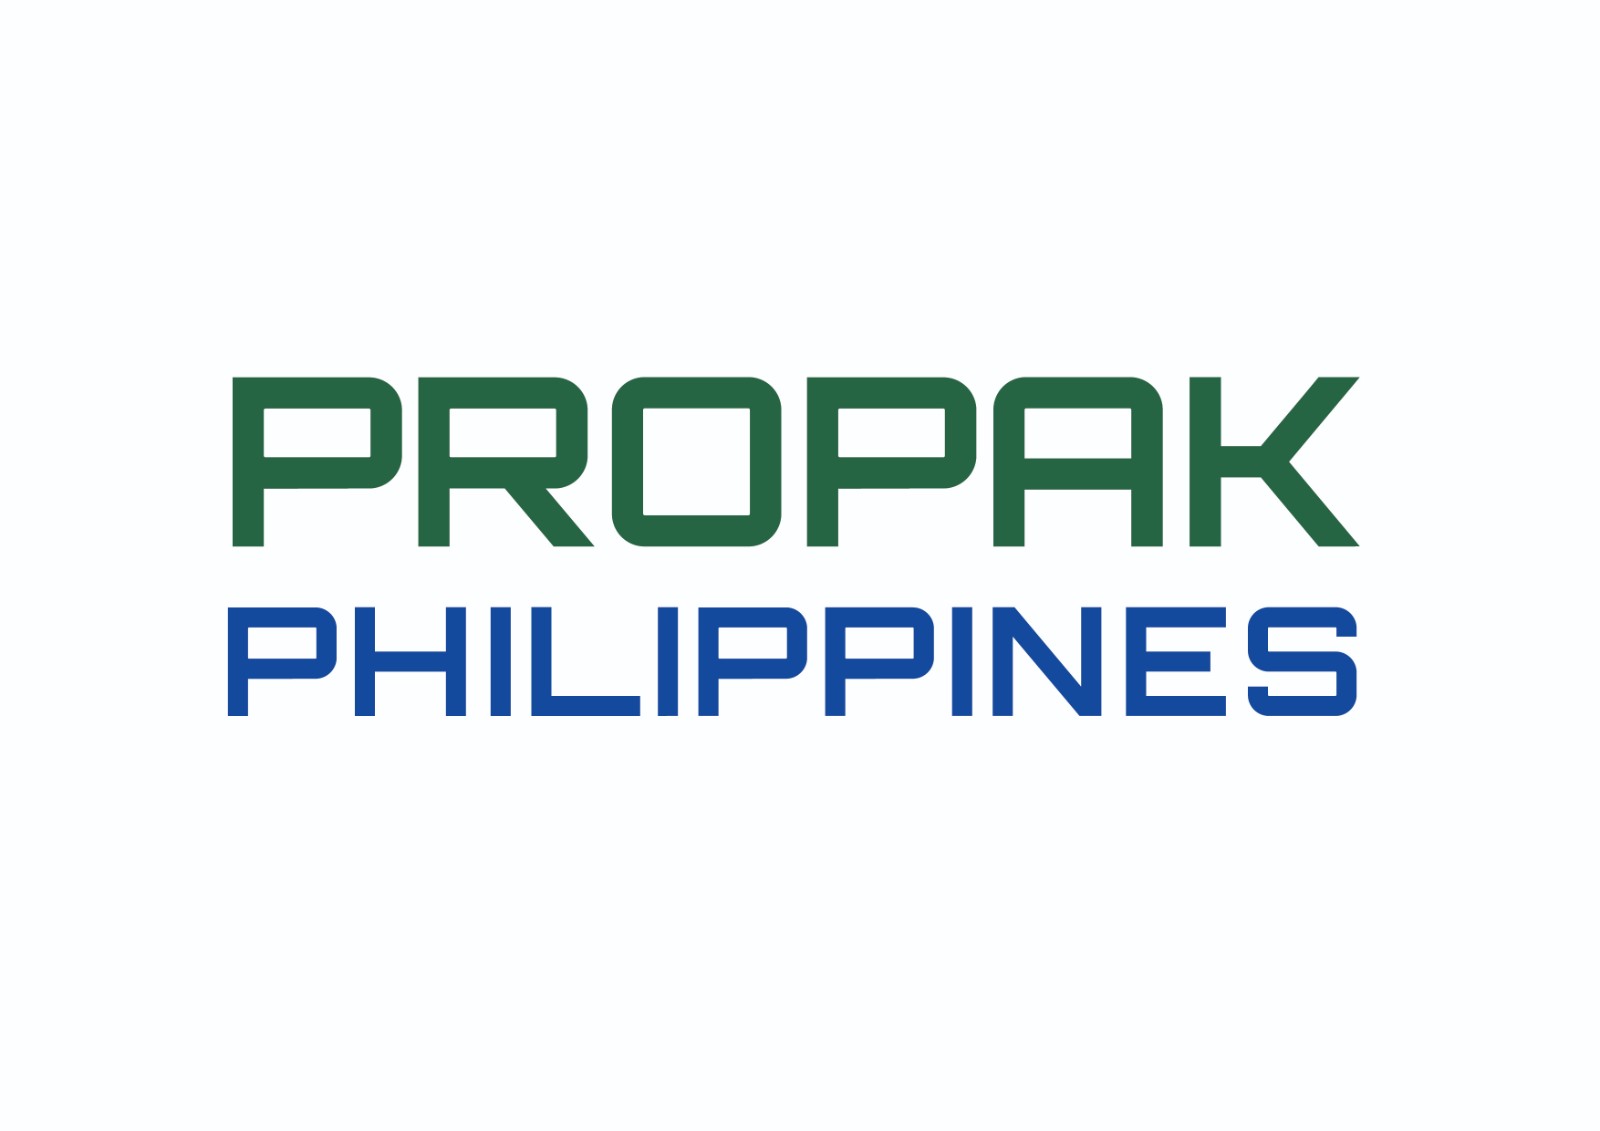 ProPak Philippines logo.jpg